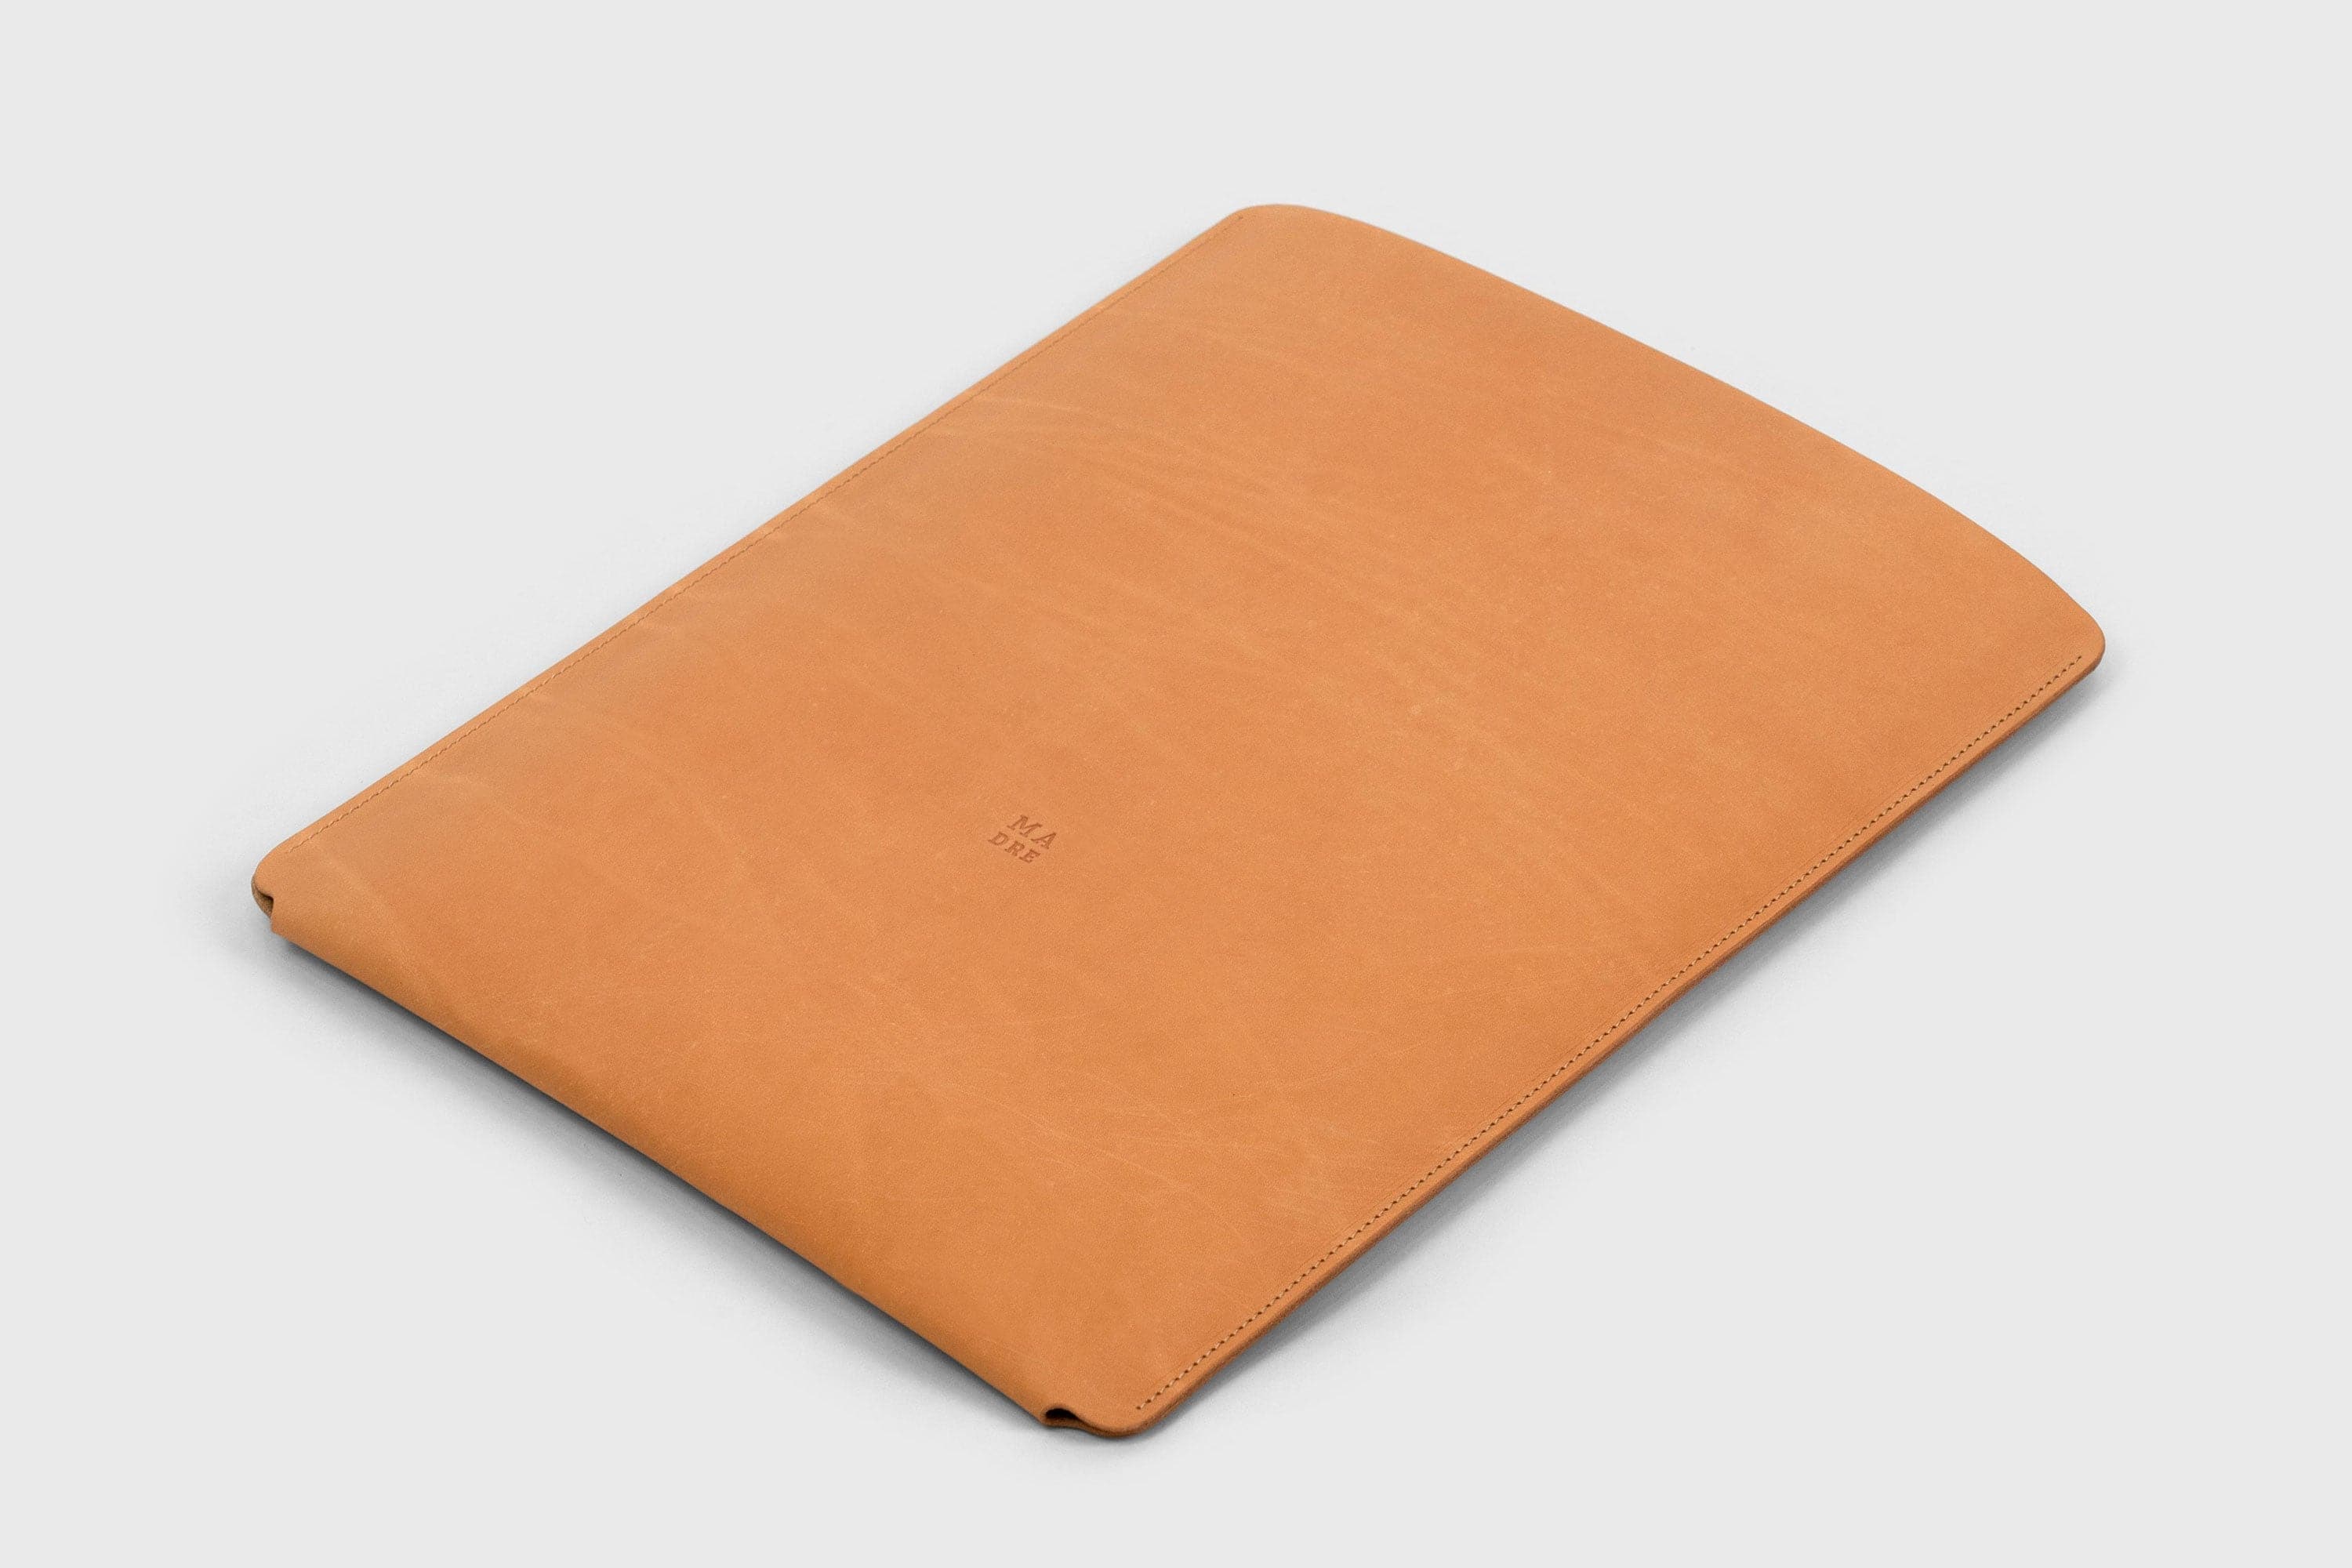 MacBook Pro 14 Inch Sleeve Leather Slip Case Bag Brown 2021 Manuel Dreesmann Atelier Madre Barcelona